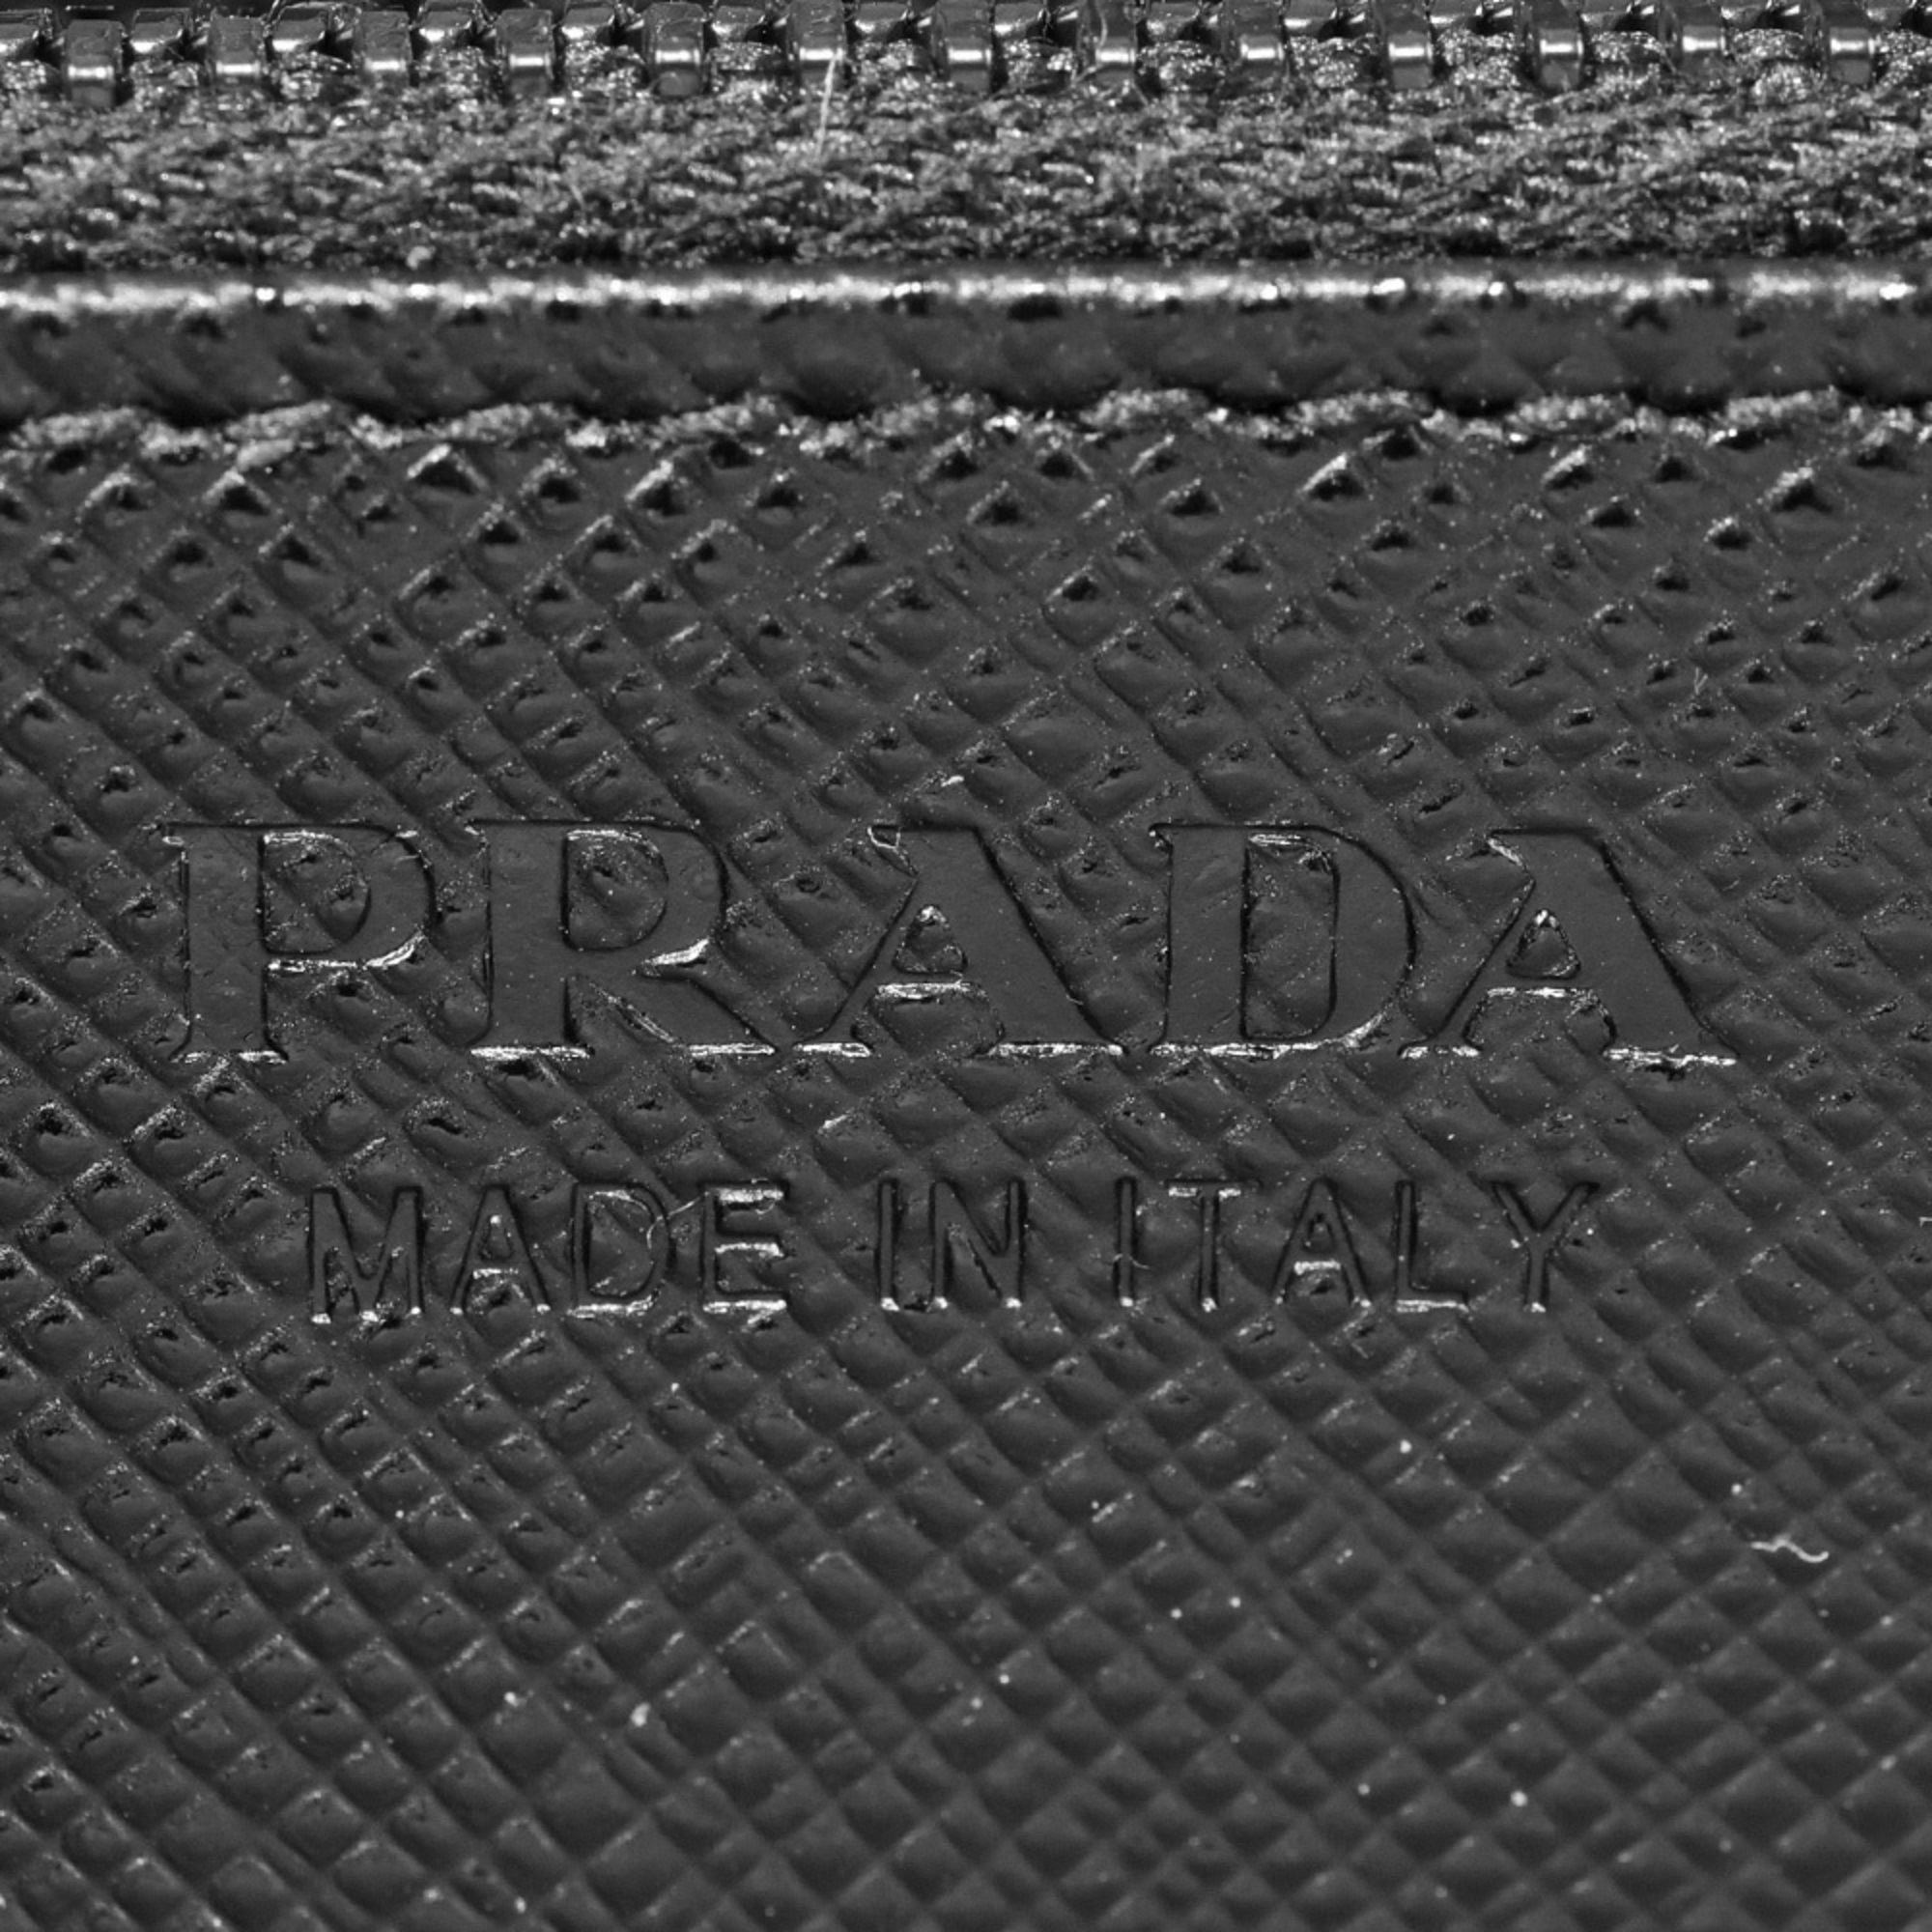 PRADA Round Saffiano 2ML317 Black Long Wallet